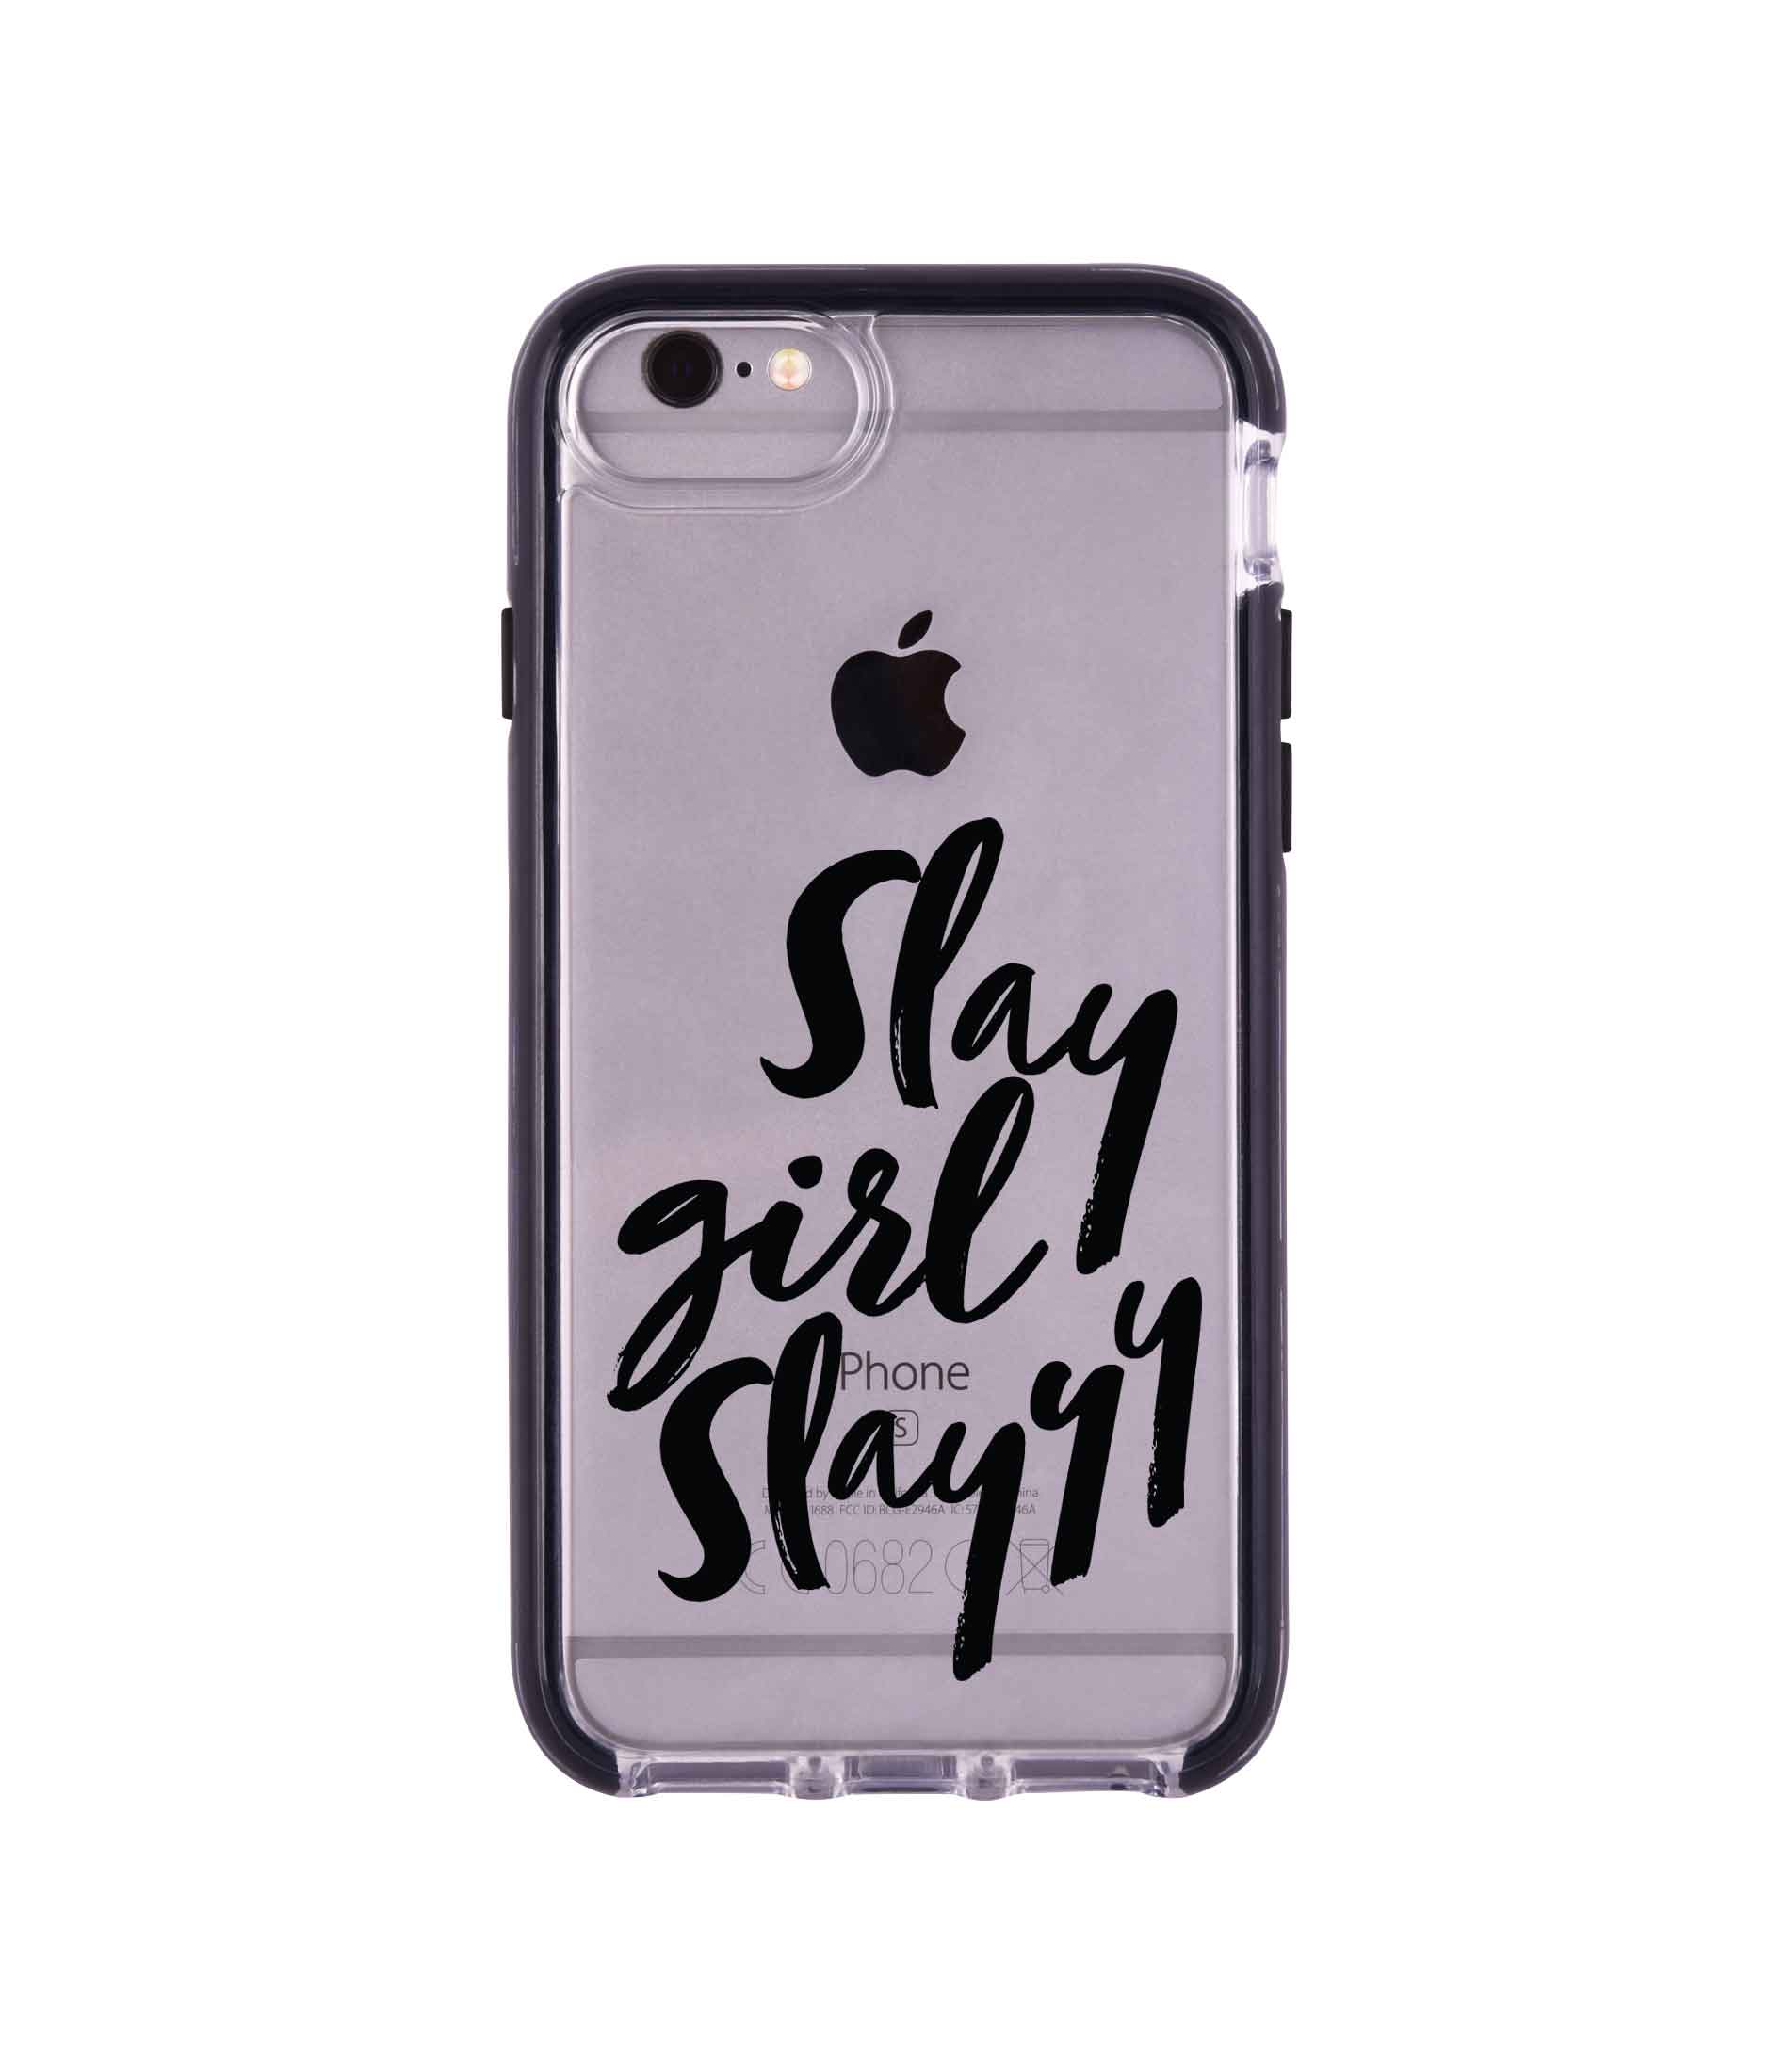 Slay girl Slay - Extreme Phone Case for iPhone 6